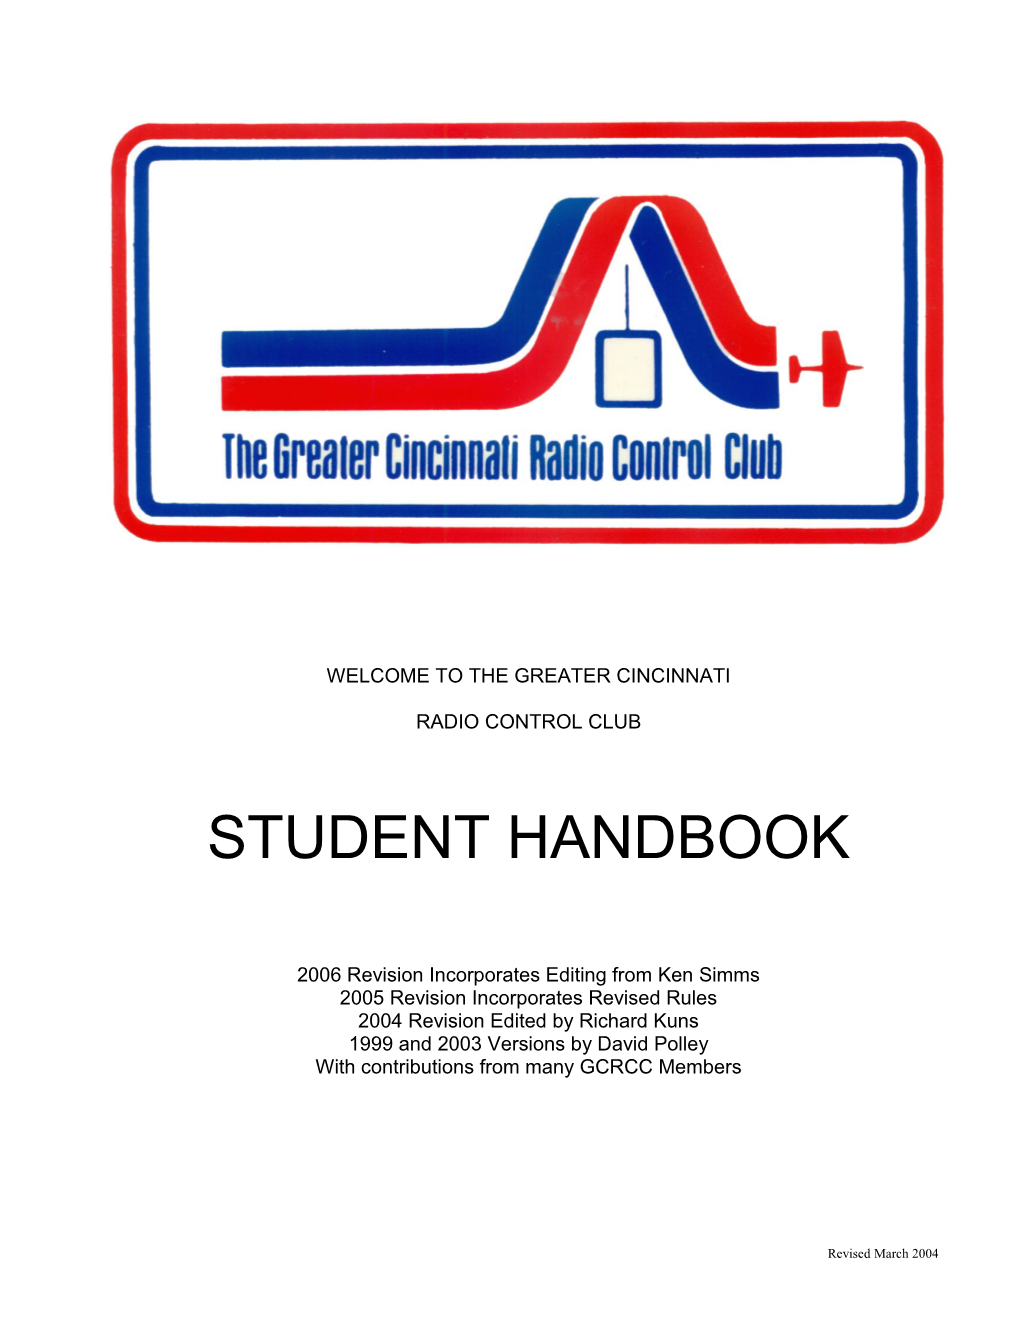 GCRCC Student Handbook